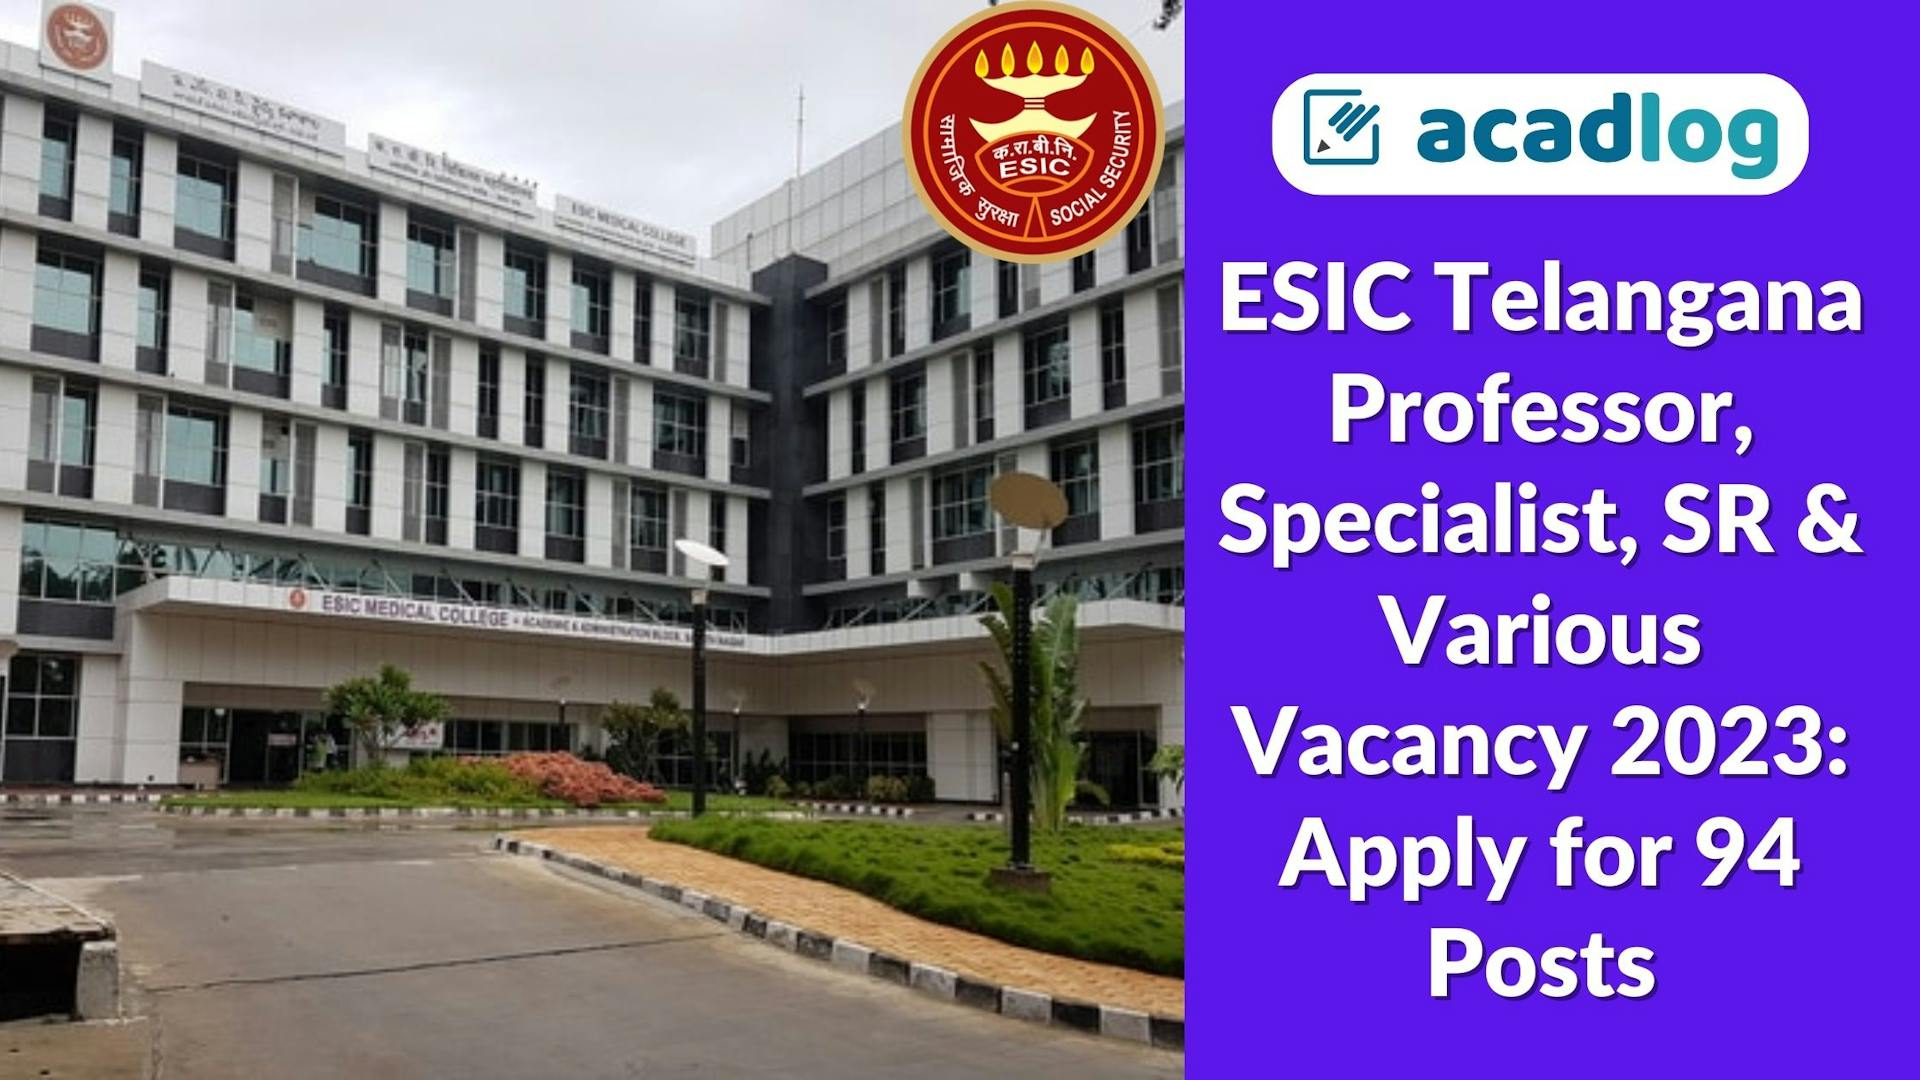 ESIC Telangana Professor, Specialist, SR & Various Vacancy 2023: Apply for 94 Posts